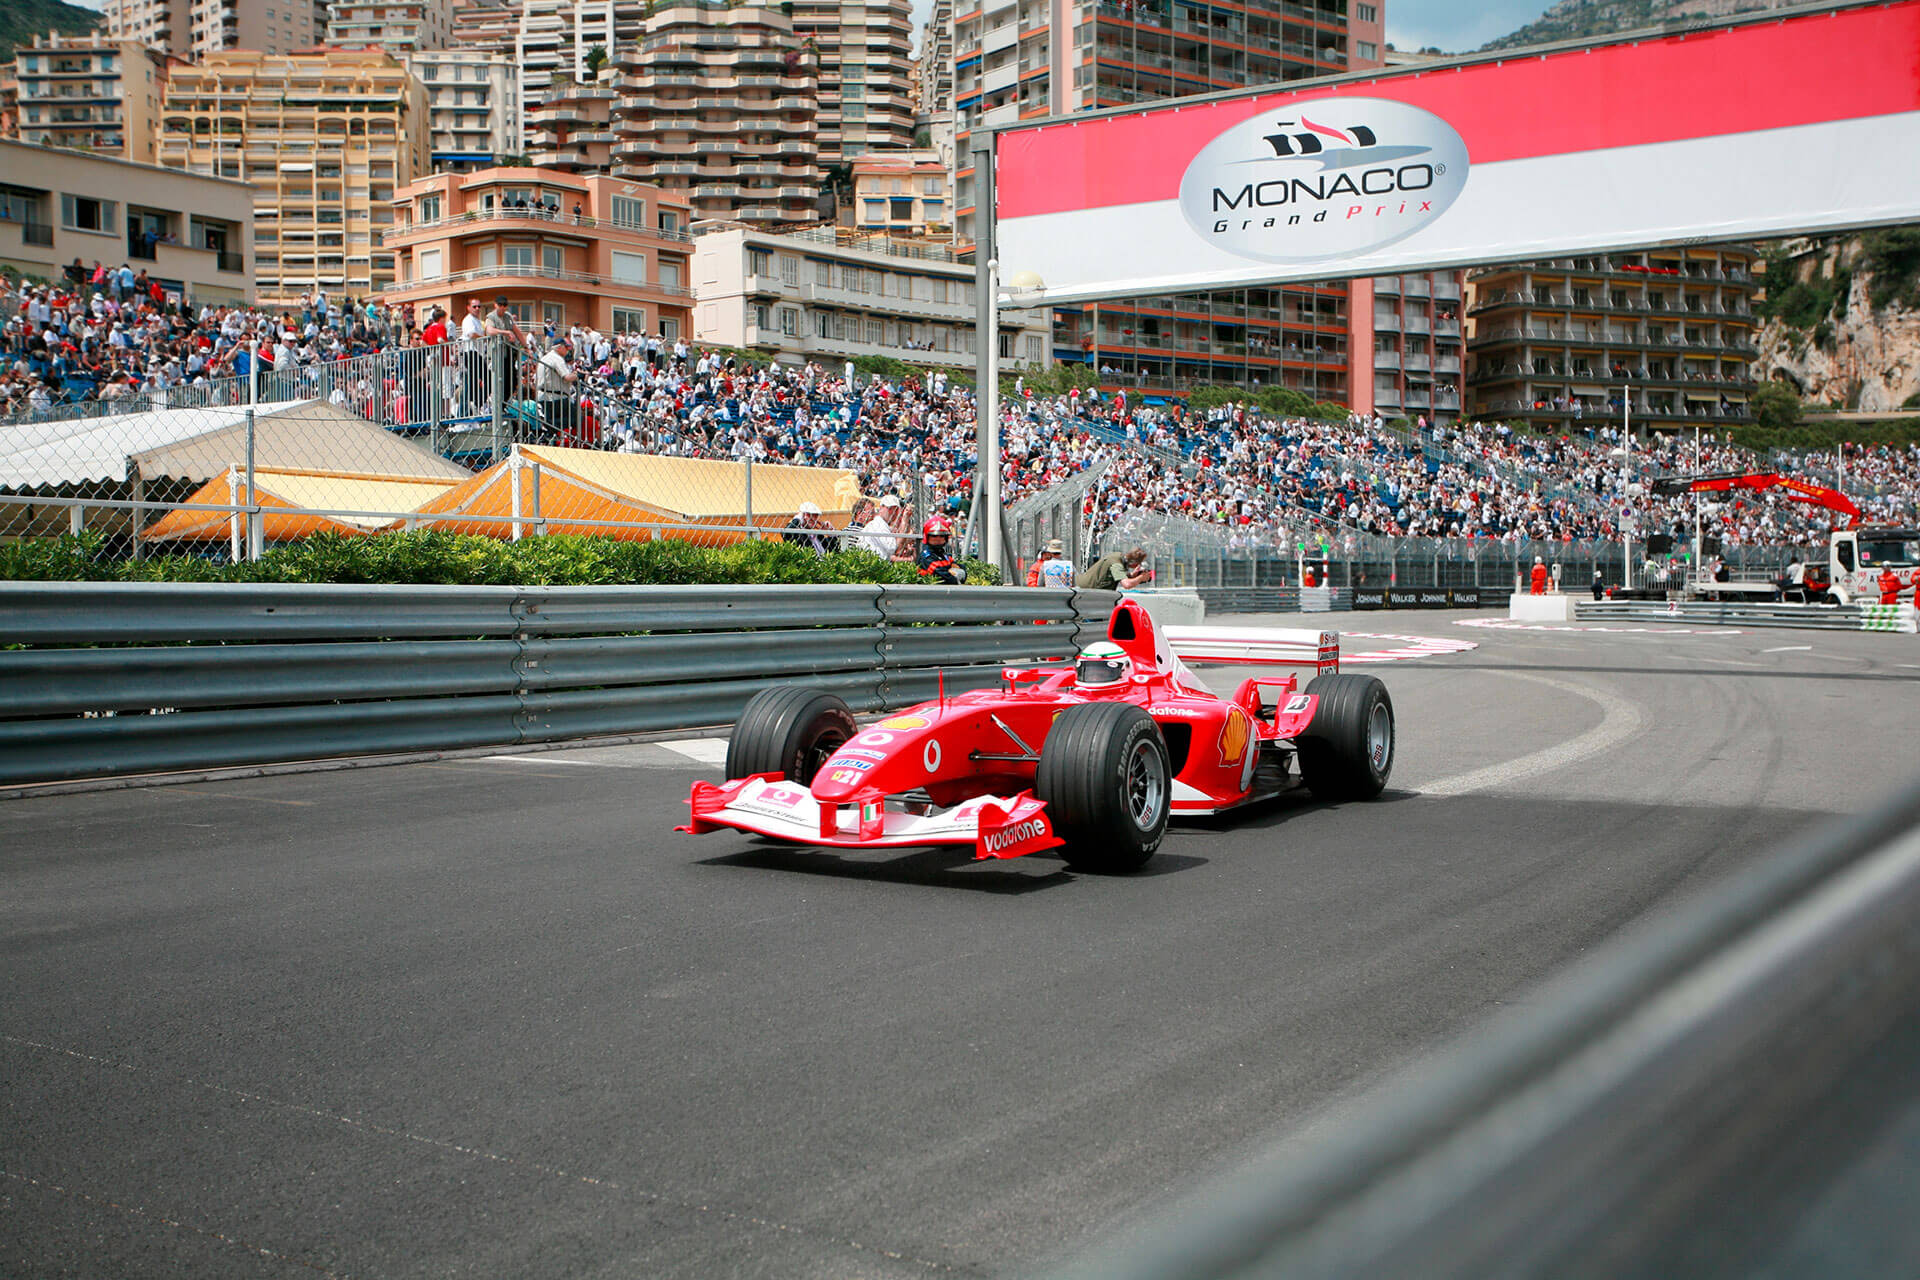 How to Watch Monaco Grand Prix 2017 Free Live 